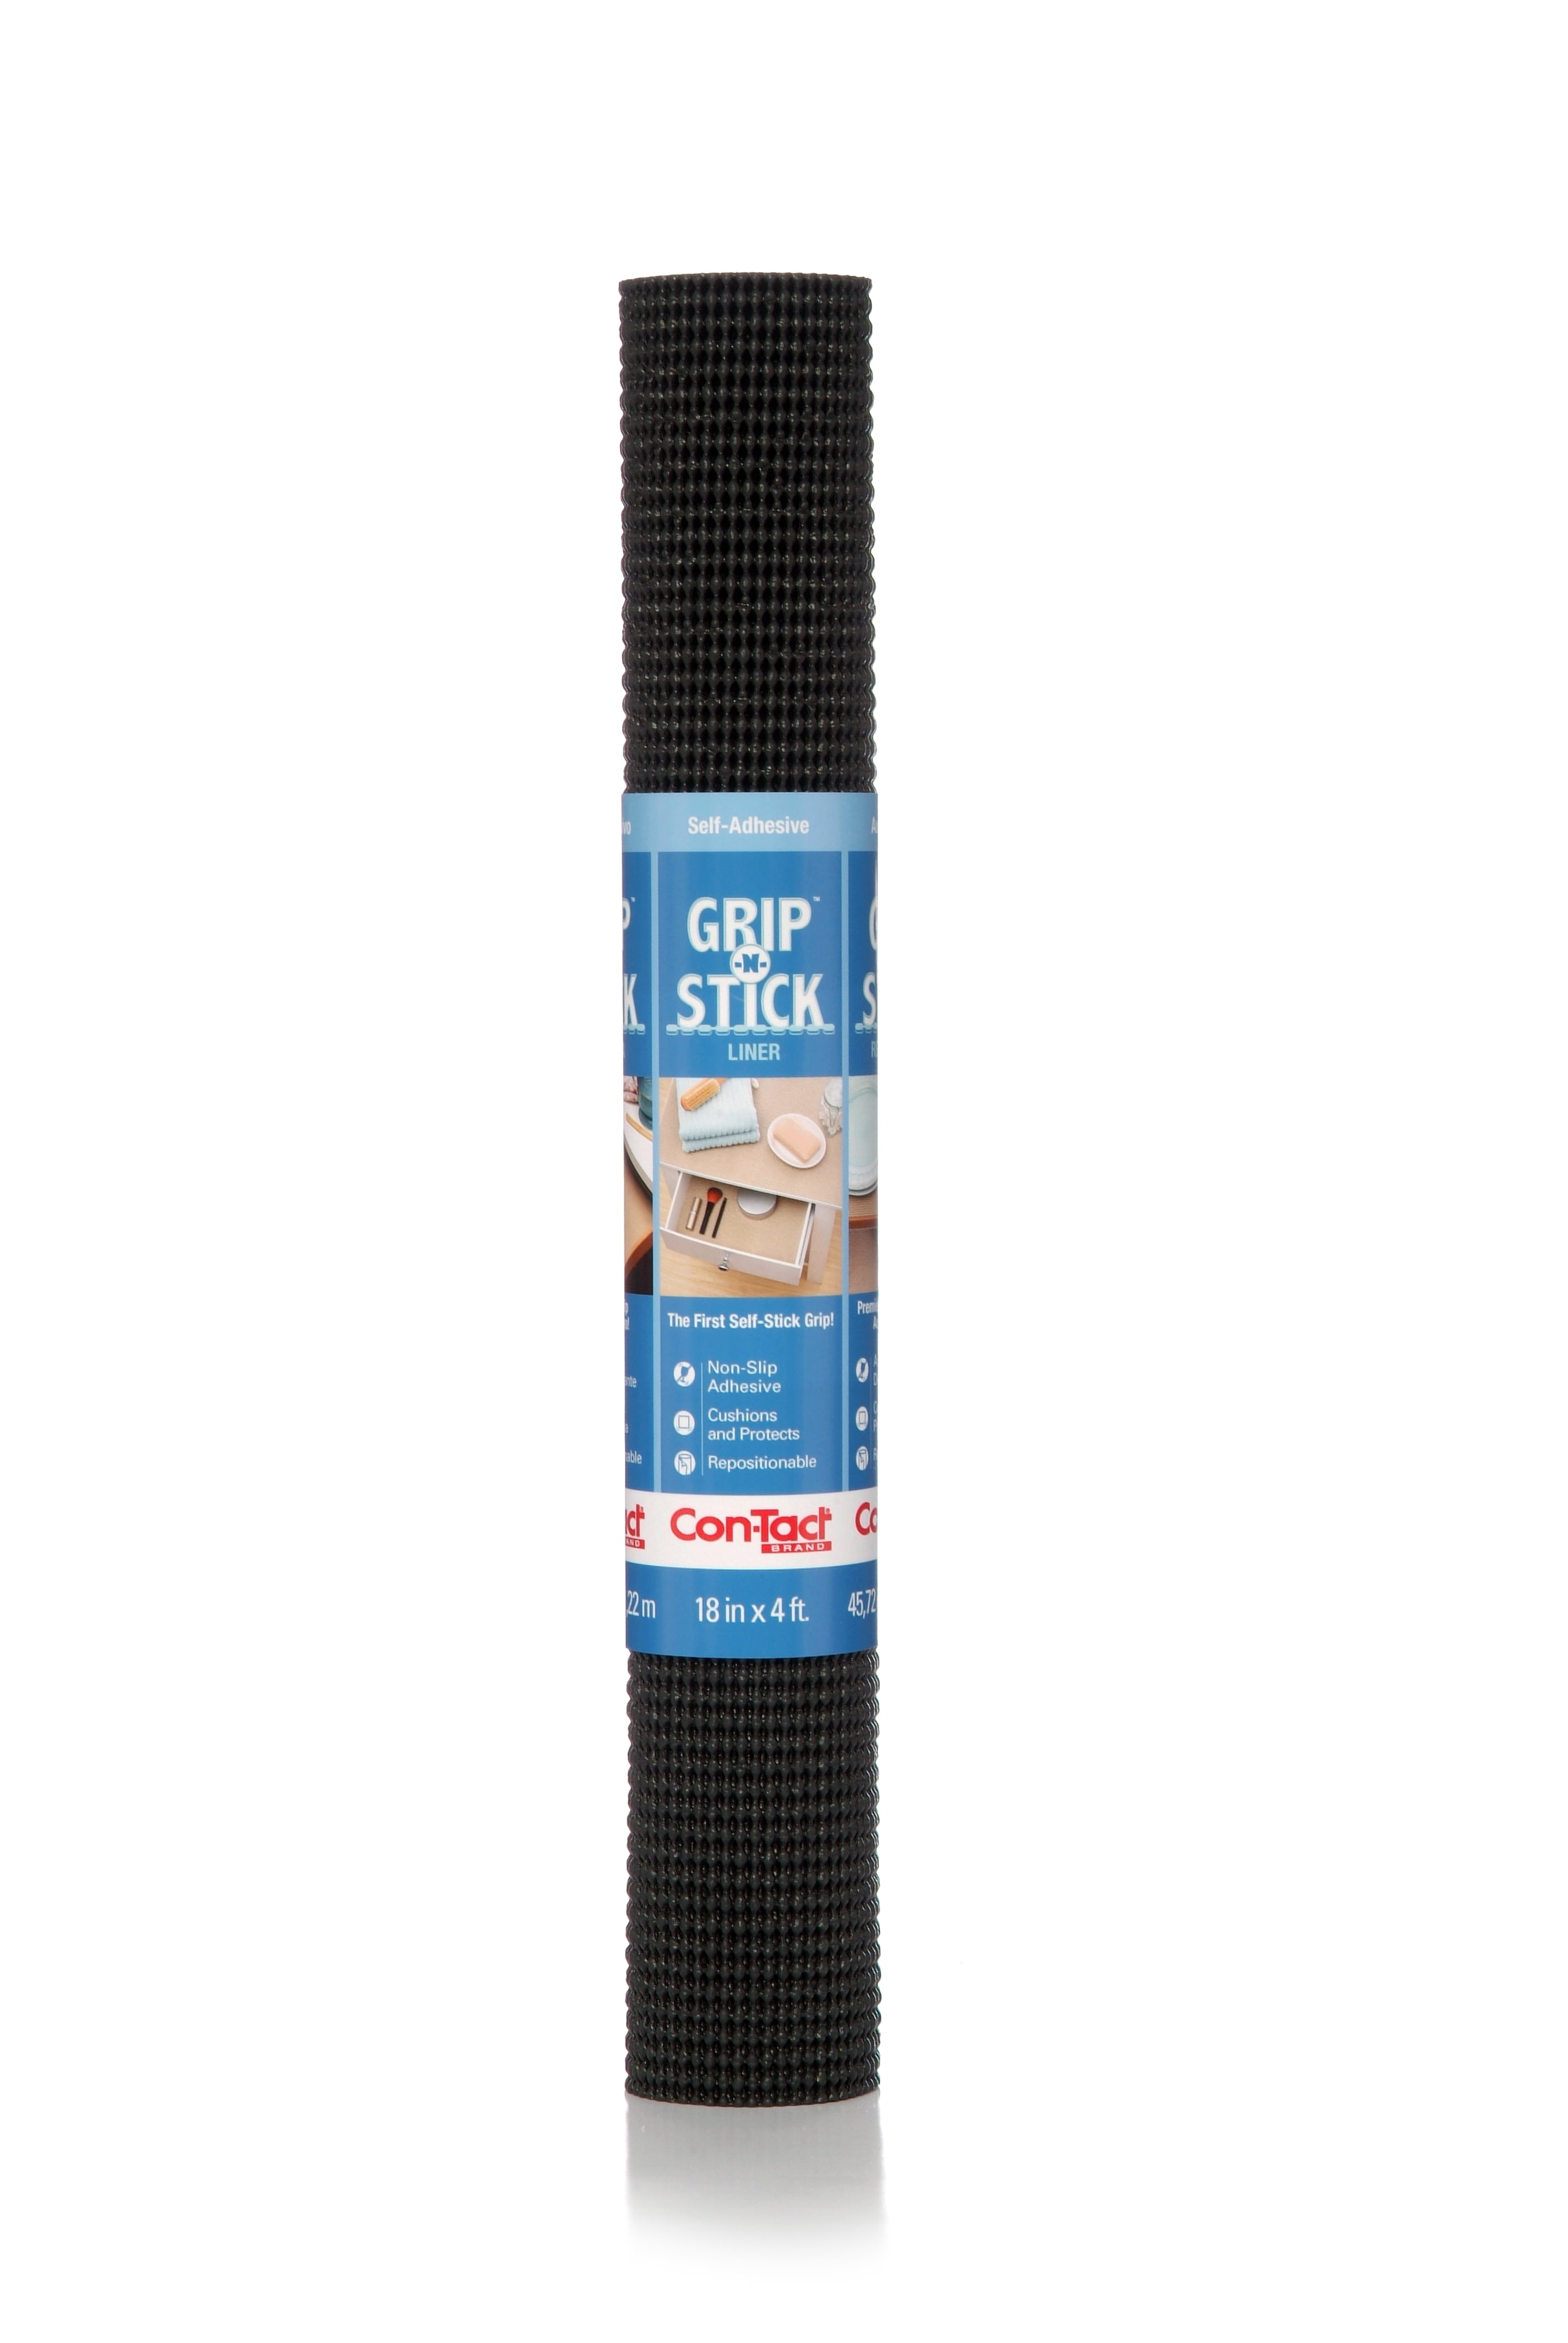 Con-Tact Brand Grip Non-Adhesive Non-Slip Shelf &Drawer Liner,12"x5Feet,Black 